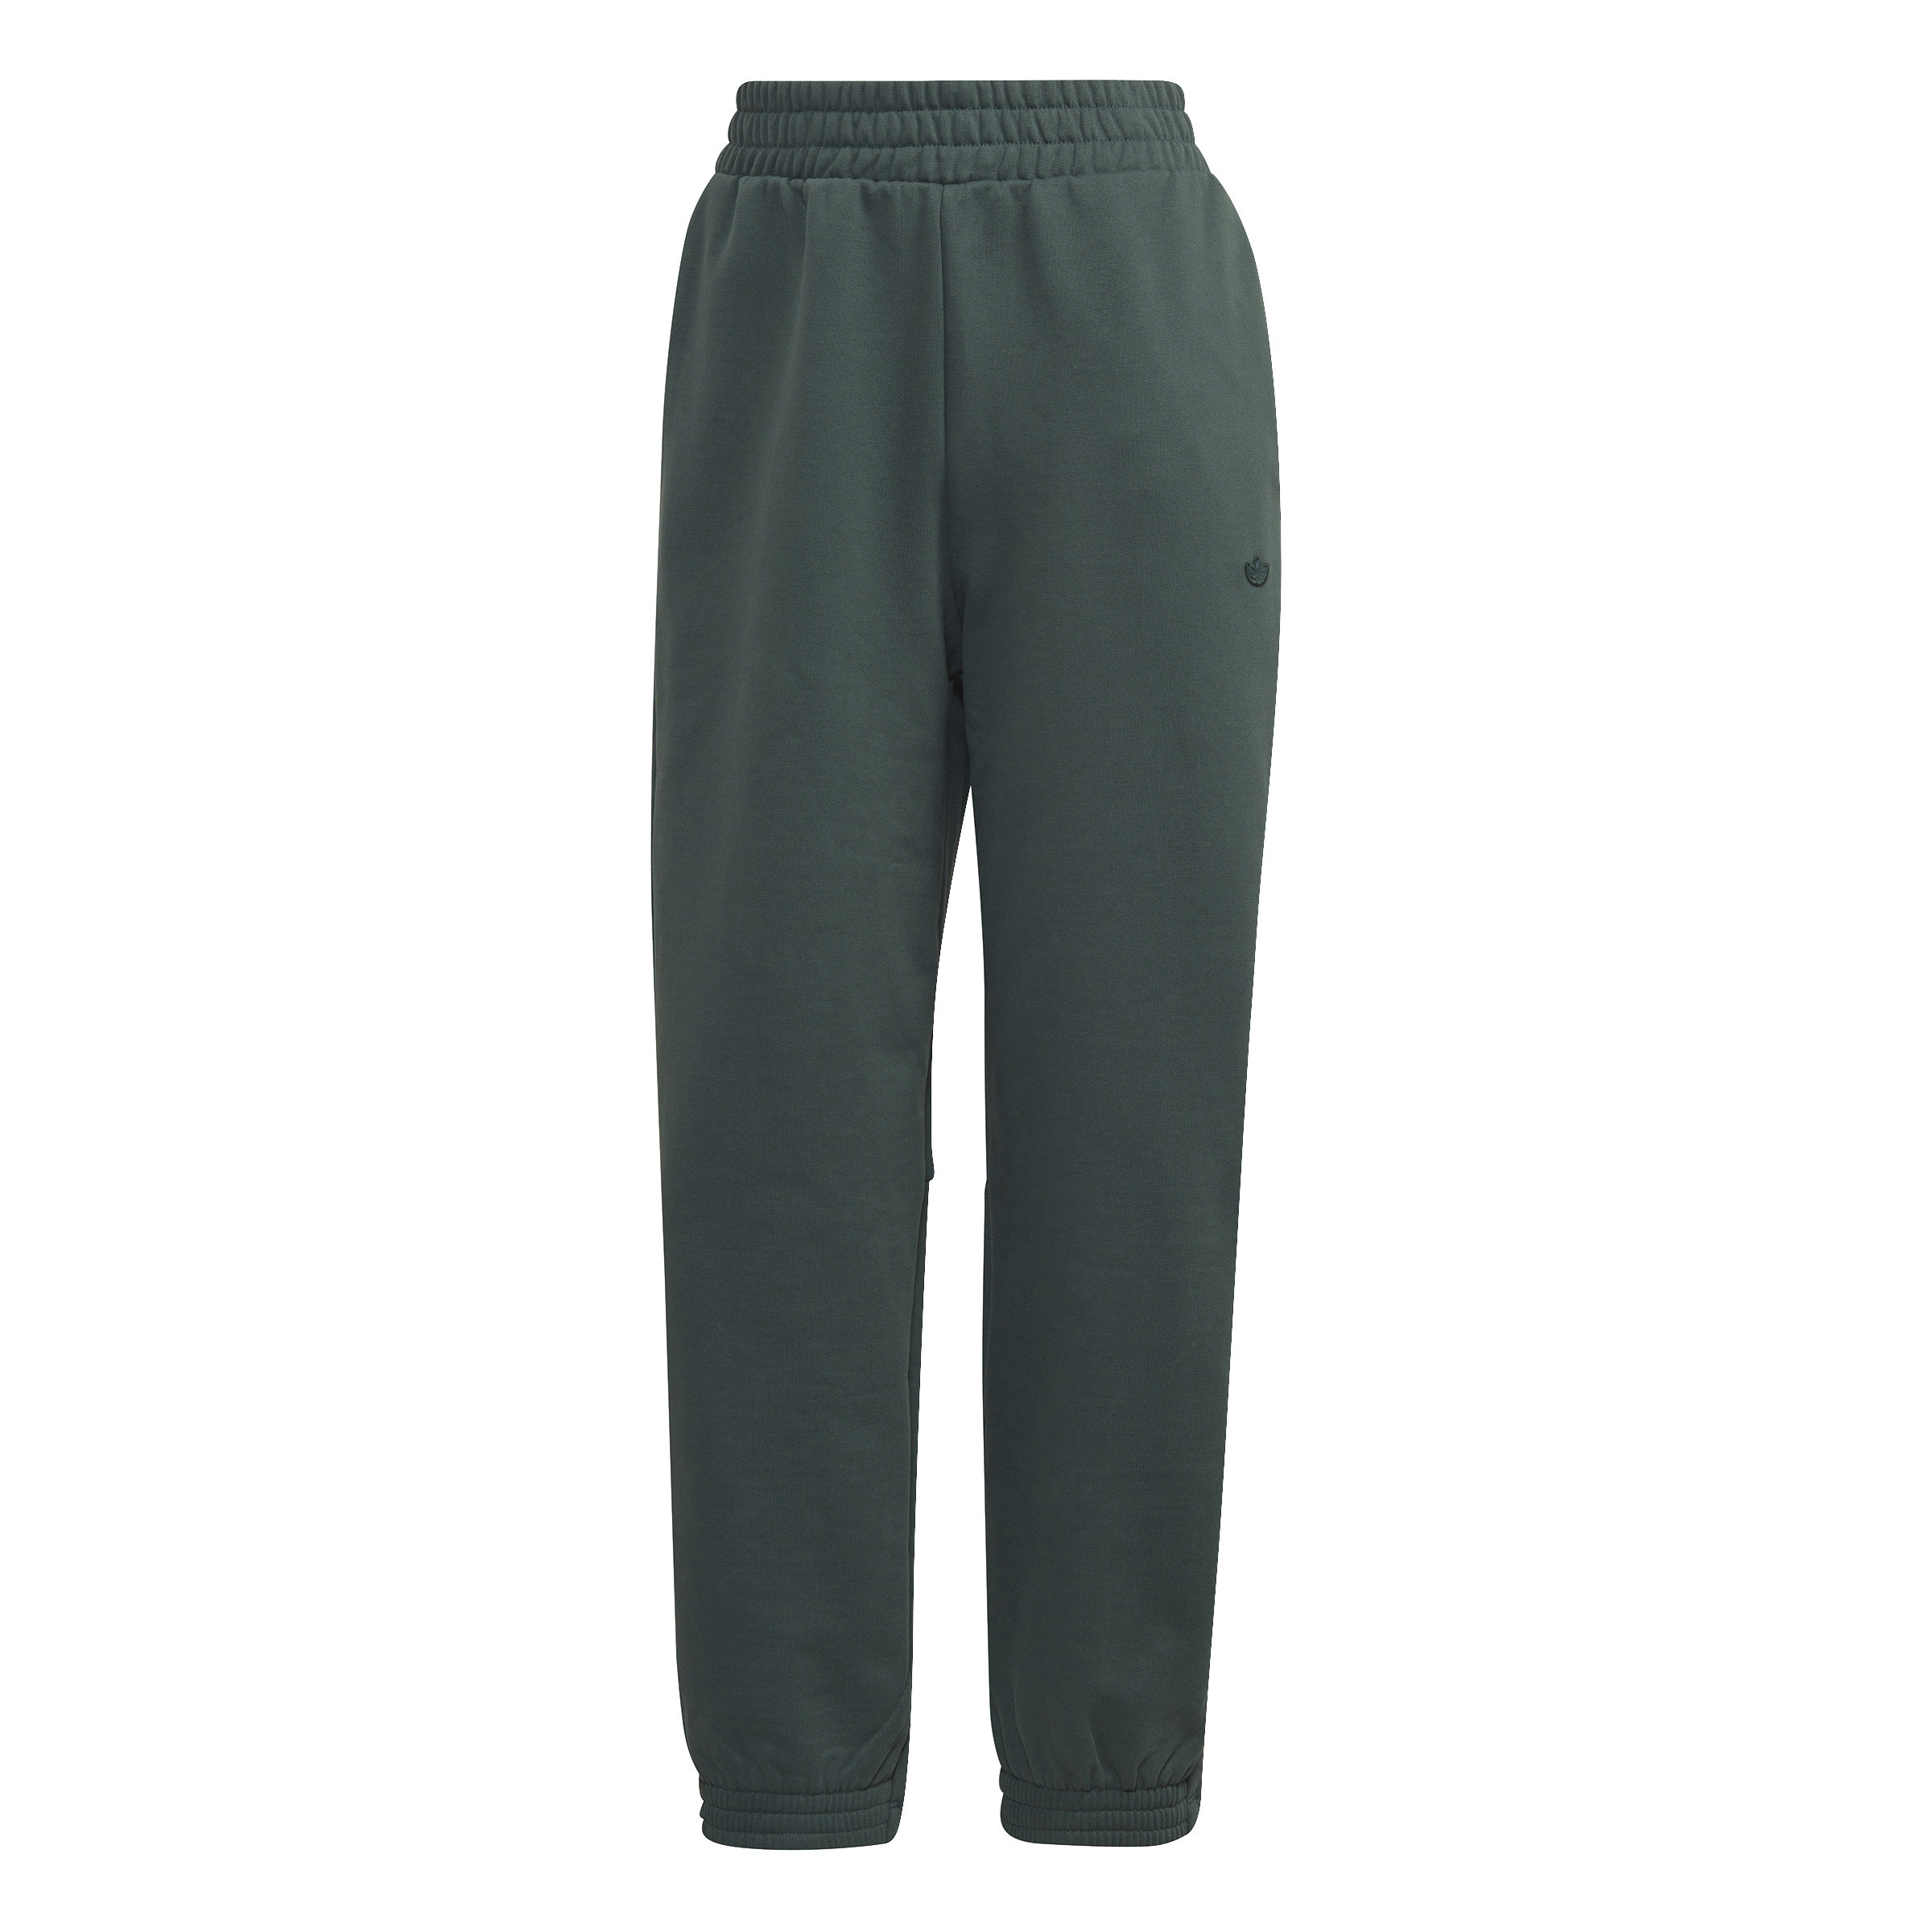 Adidas - Pantaloni jogger adicolor, Verde scuro, large image number 0